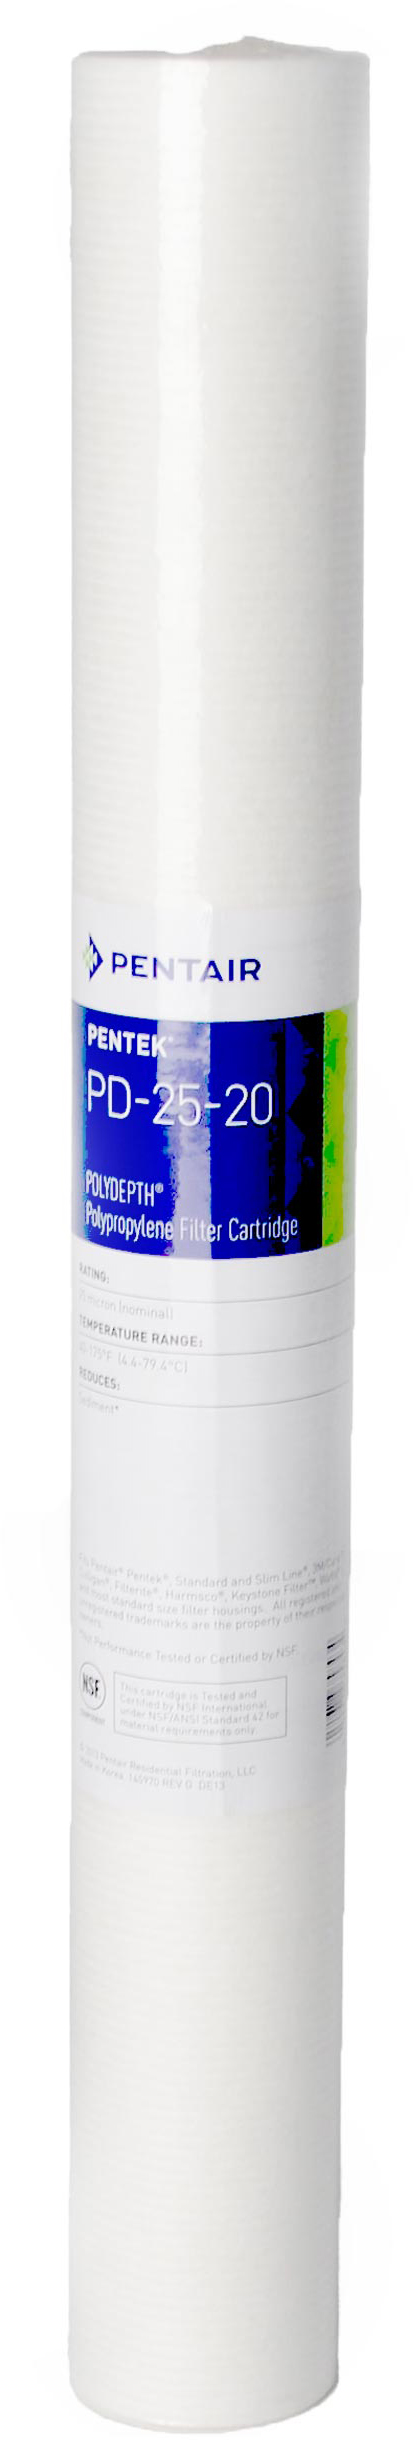 Картридж для гарячої води Pentek PD-5-20 Polydepth (155756-43)